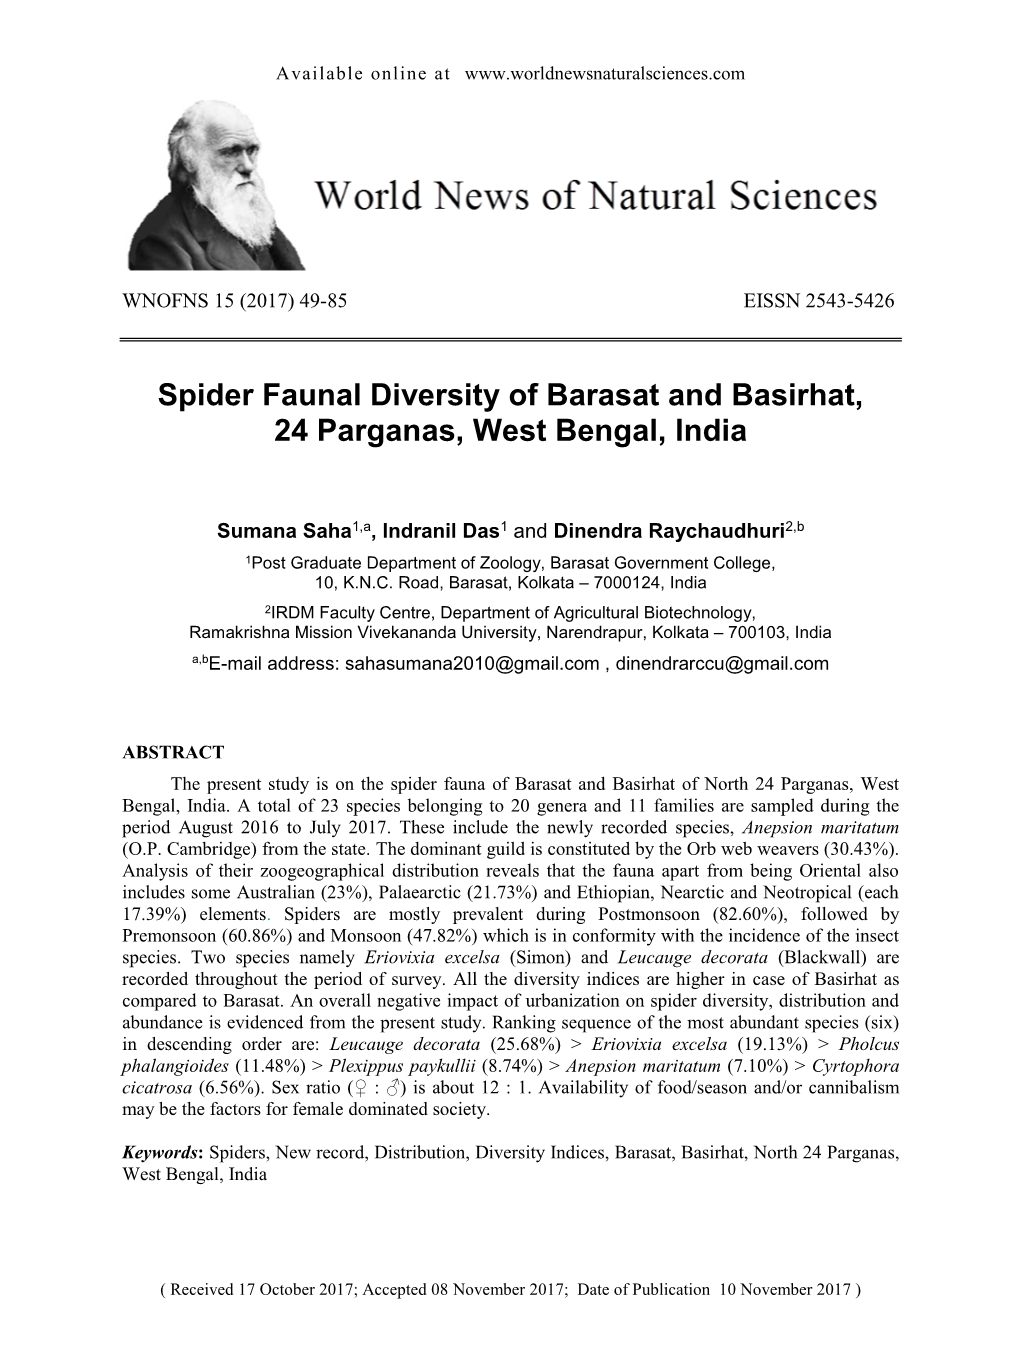 Spider Faunal Diversity of Barasat and Basirhat, 24 Parganas, West Bengal, India